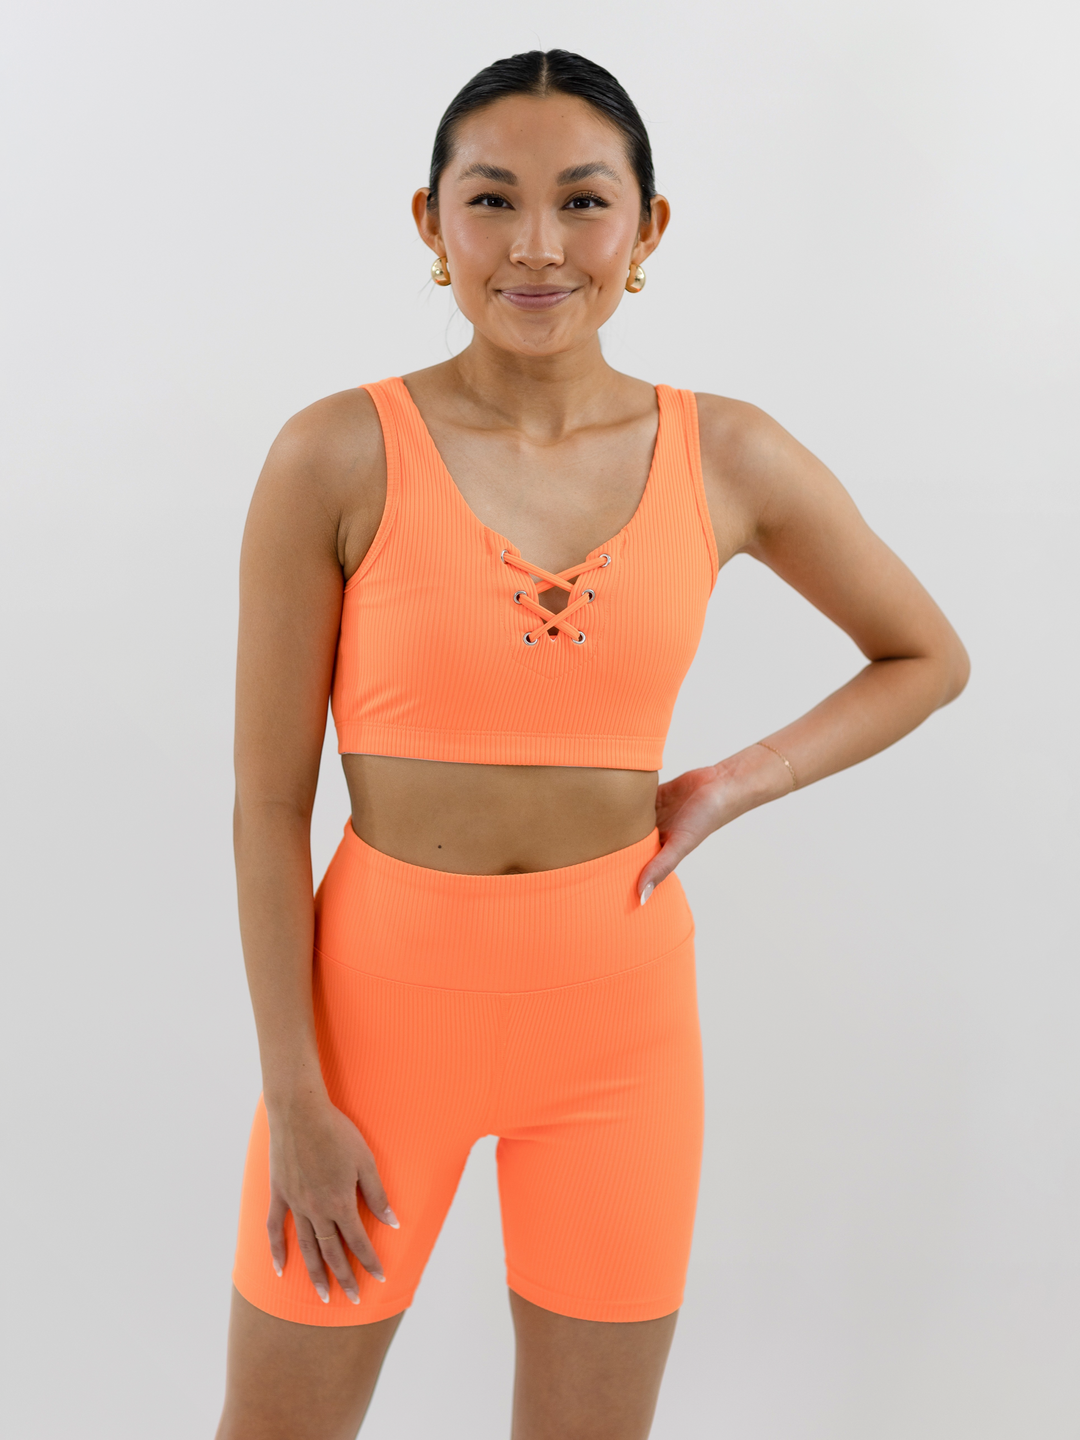 Women Sports Bra And Yoga Shorts Set - Neon Orange at Rs 1799.00, Ladies  Sports Bra